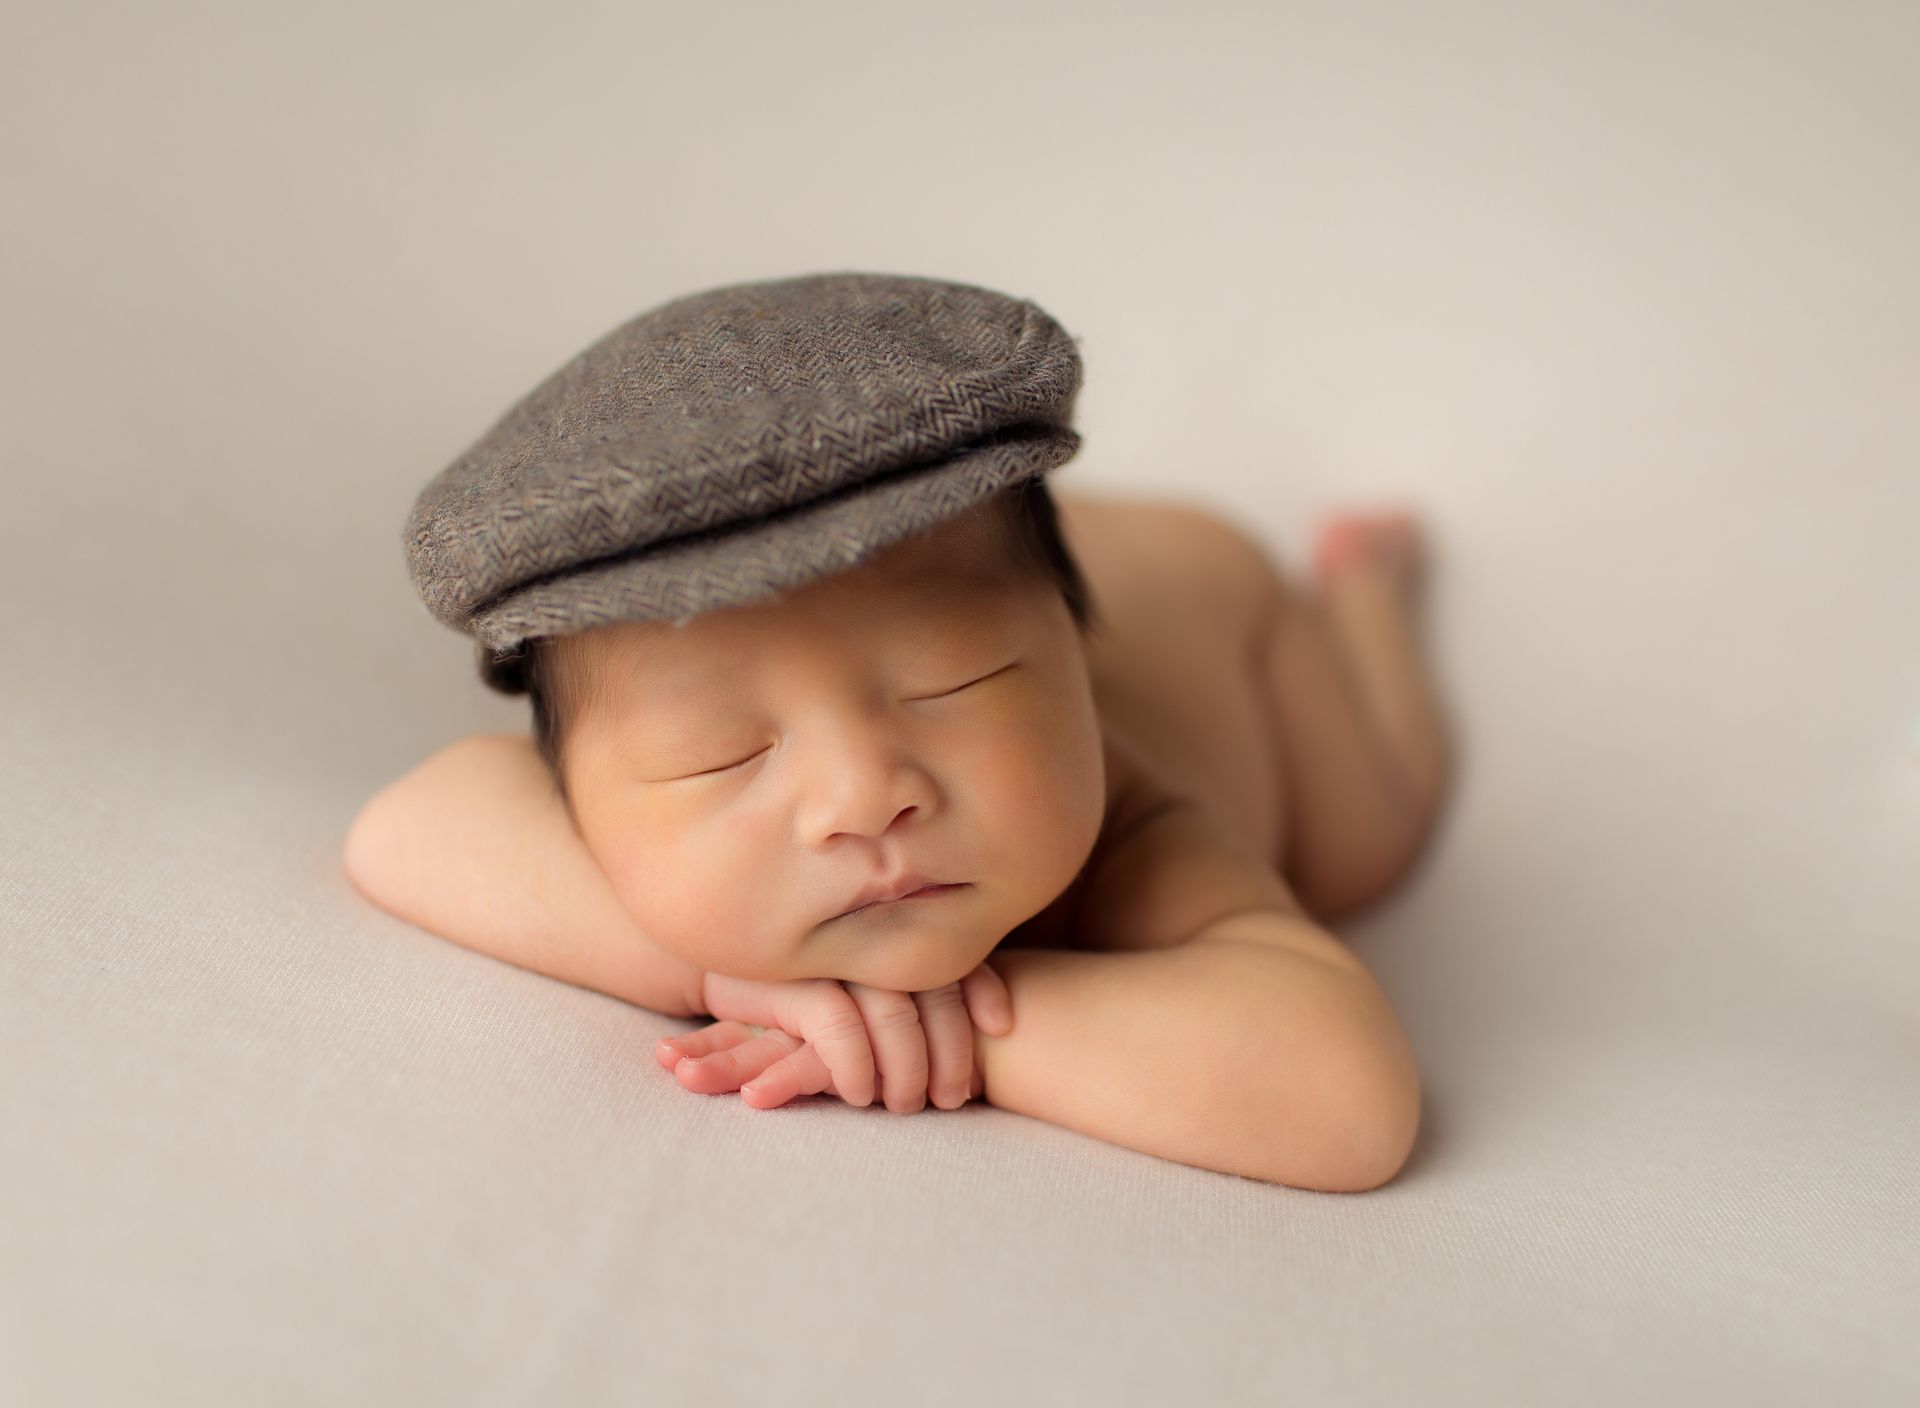 A newborn baby wearing a hat is sleeping on a blanket.